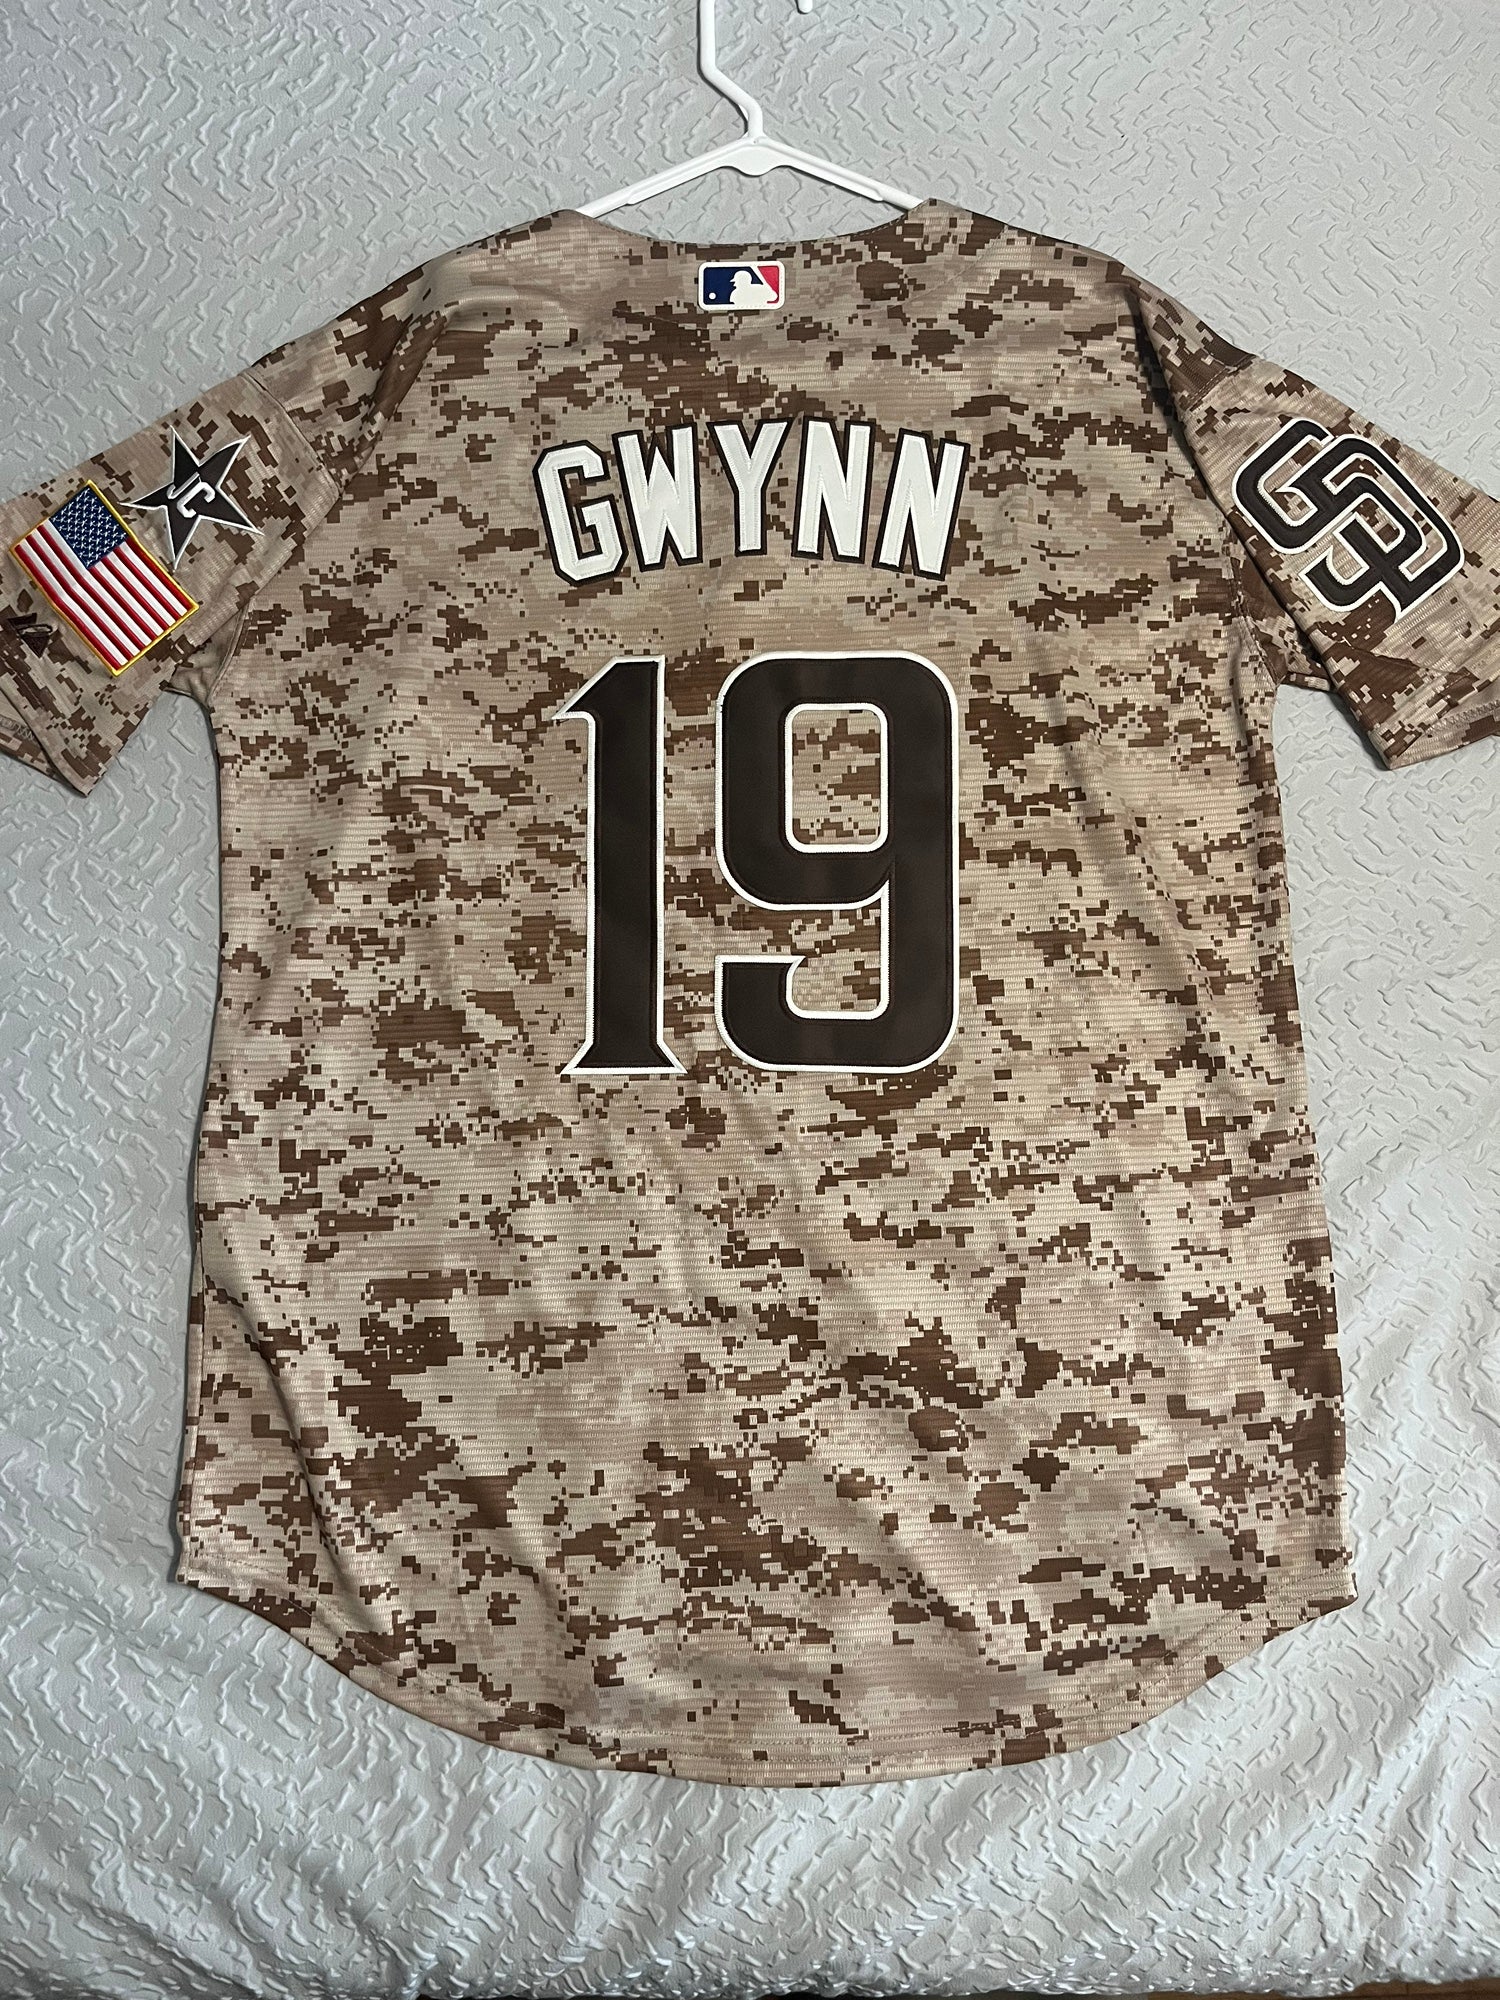 San Diego Padres Retro #19 Gwynn Jersey Size 36 S